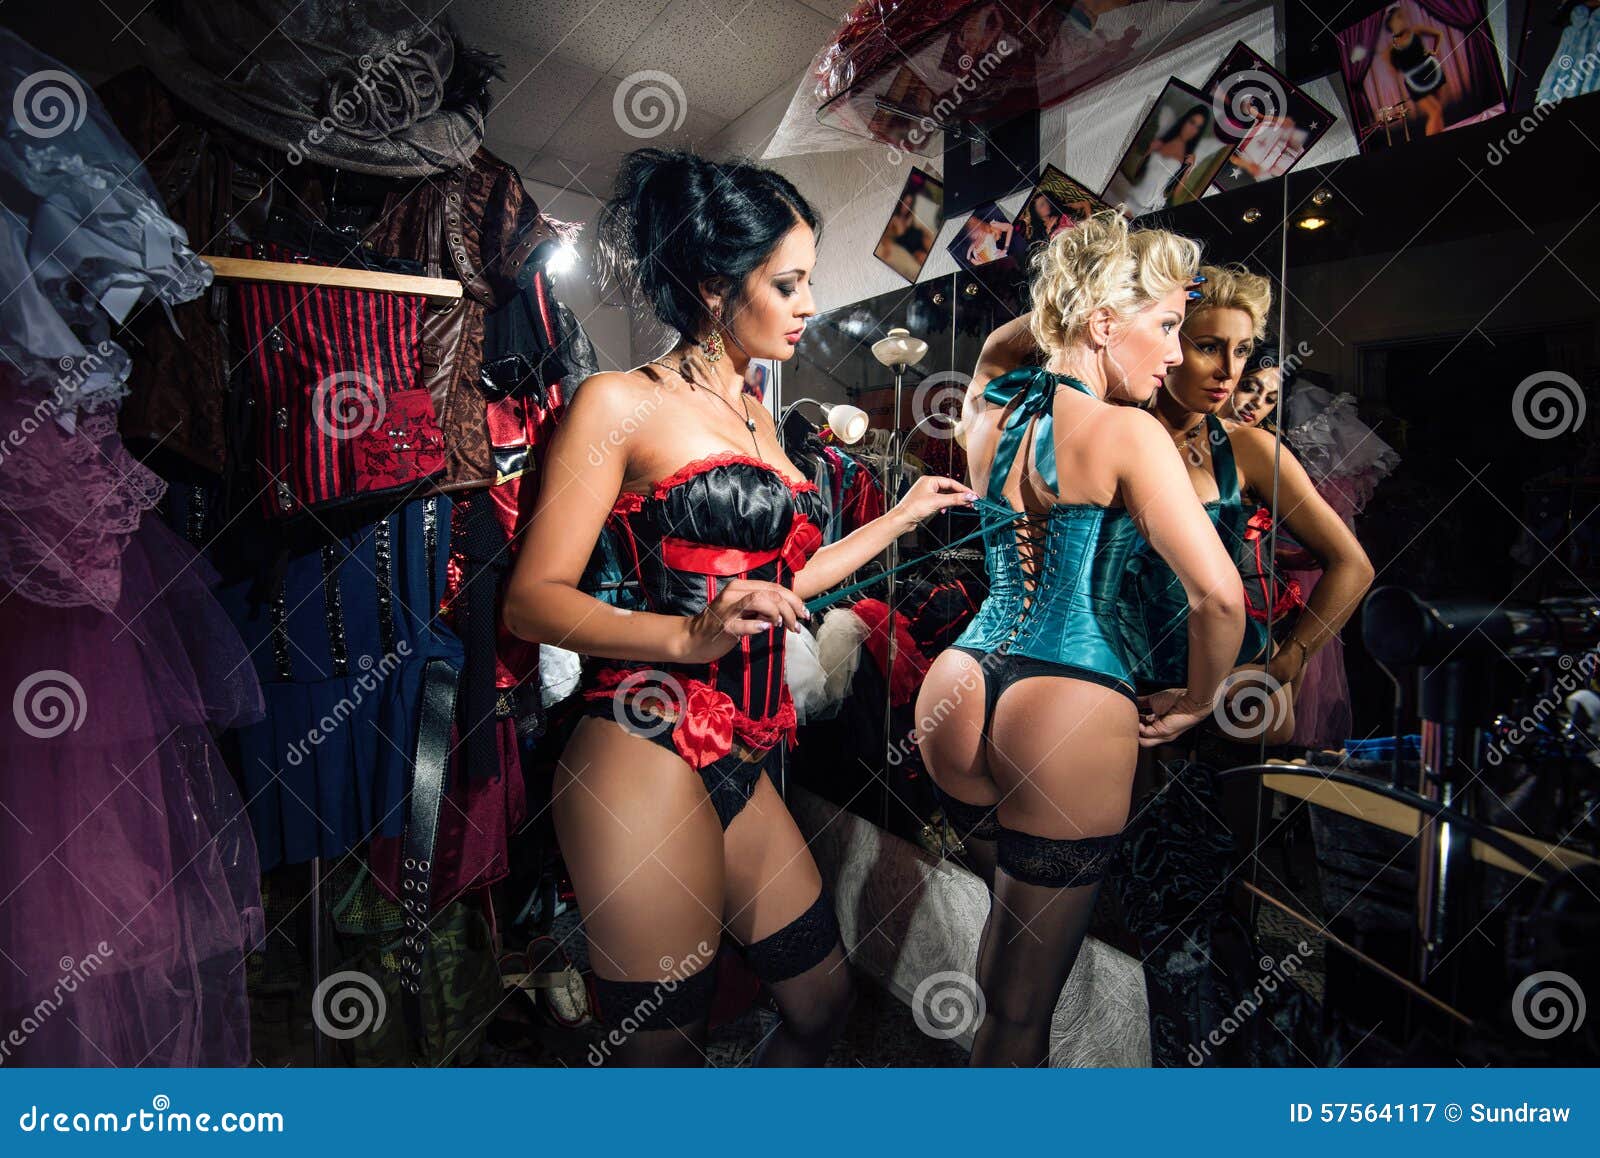 cabaret female dancers at mirror in dressing room